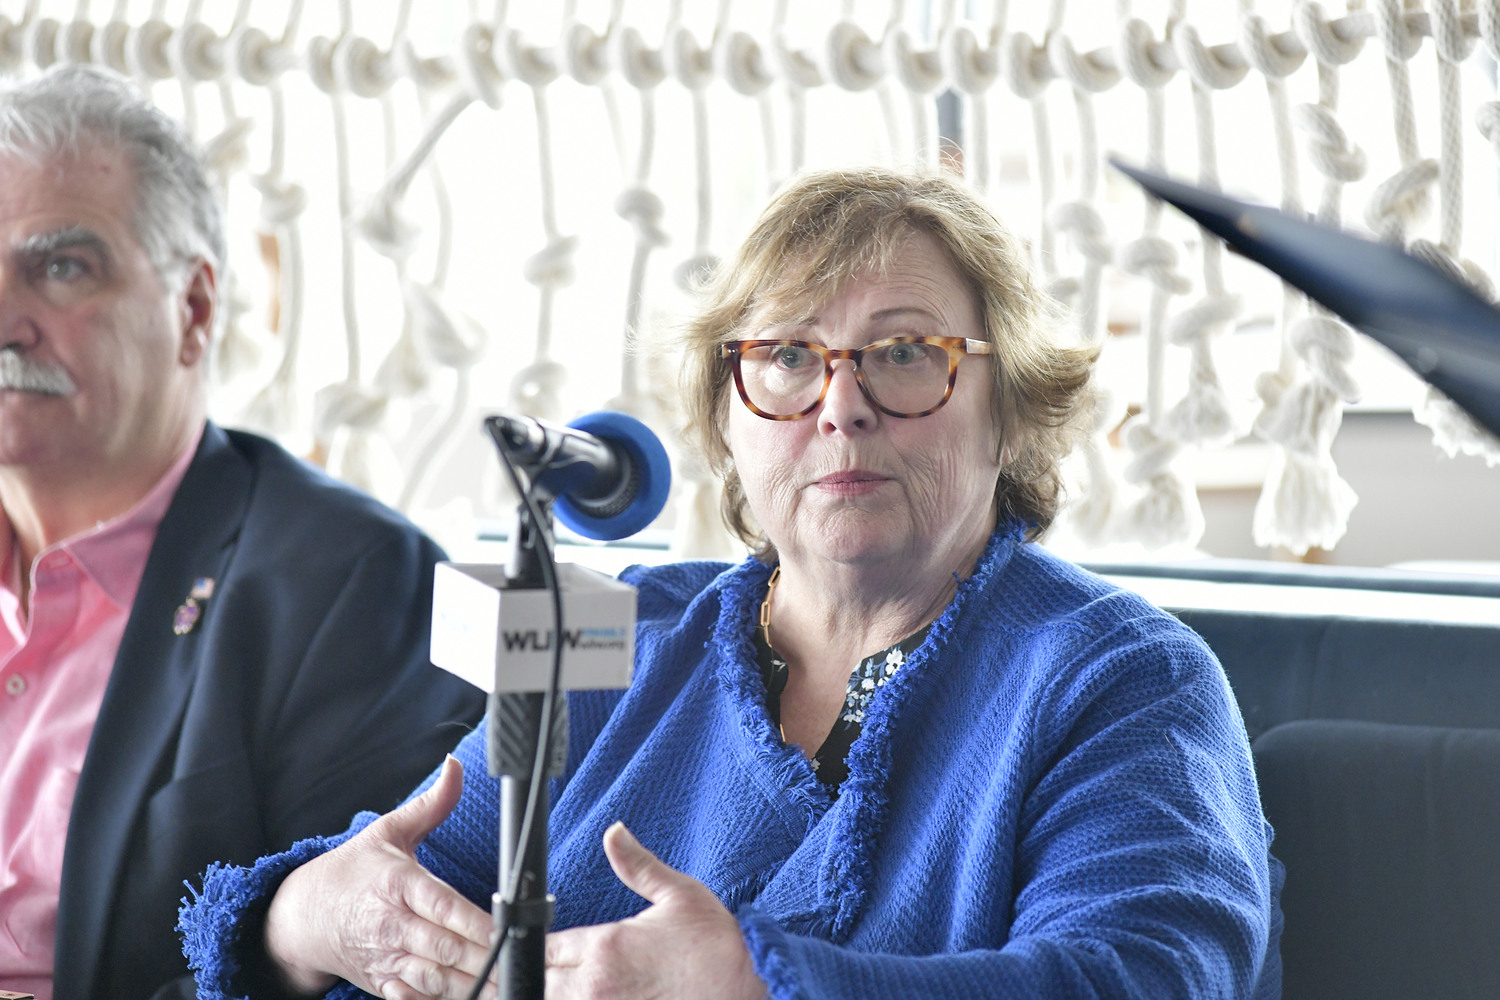 Panelist and East Hampton Town Councilwoman Cate Rogers.  DANA SHAW